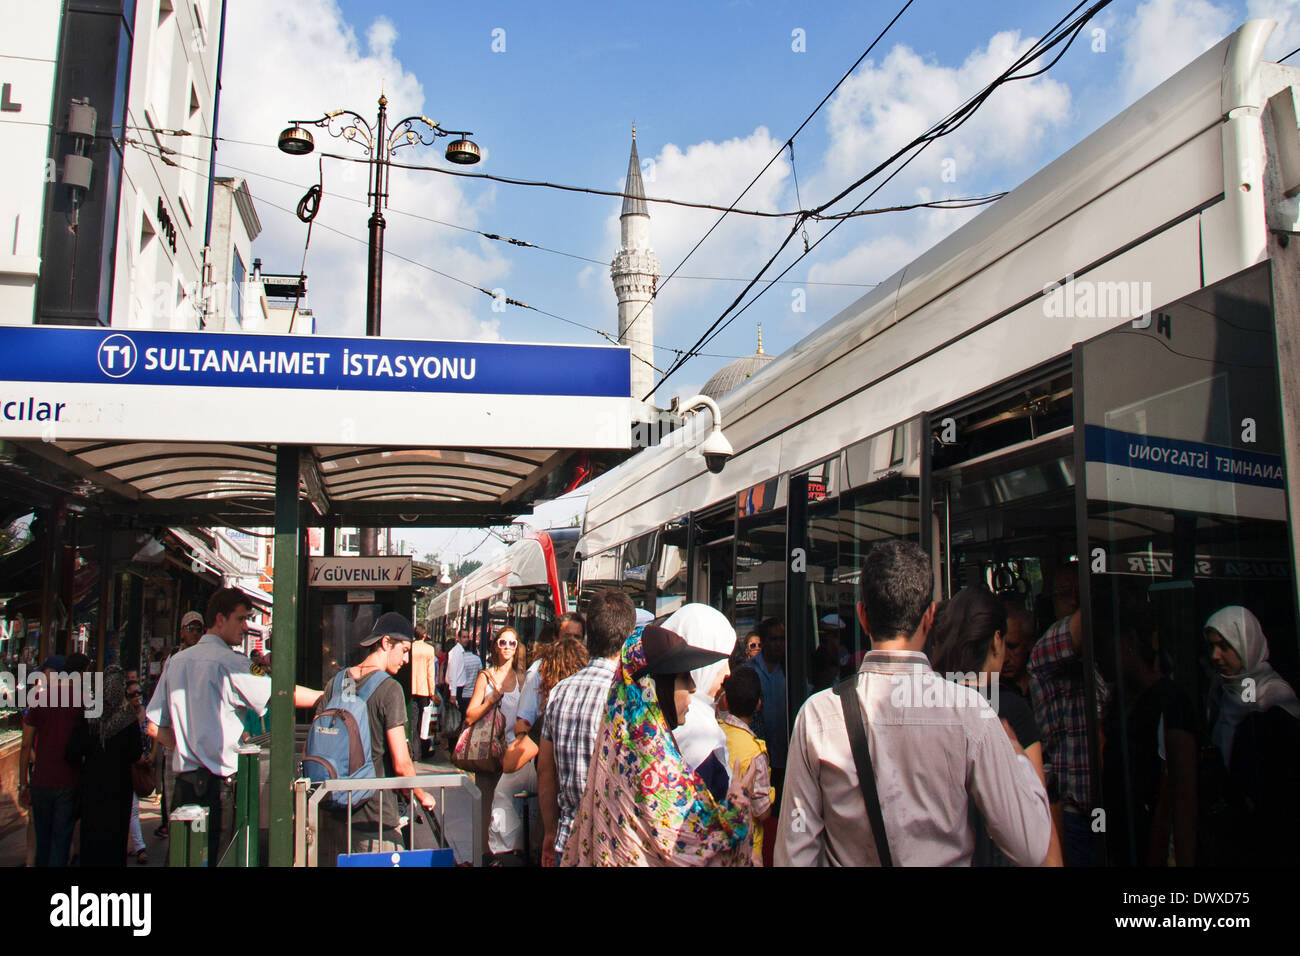 Tram station in Sultanahmet; Istambul Stock Photo